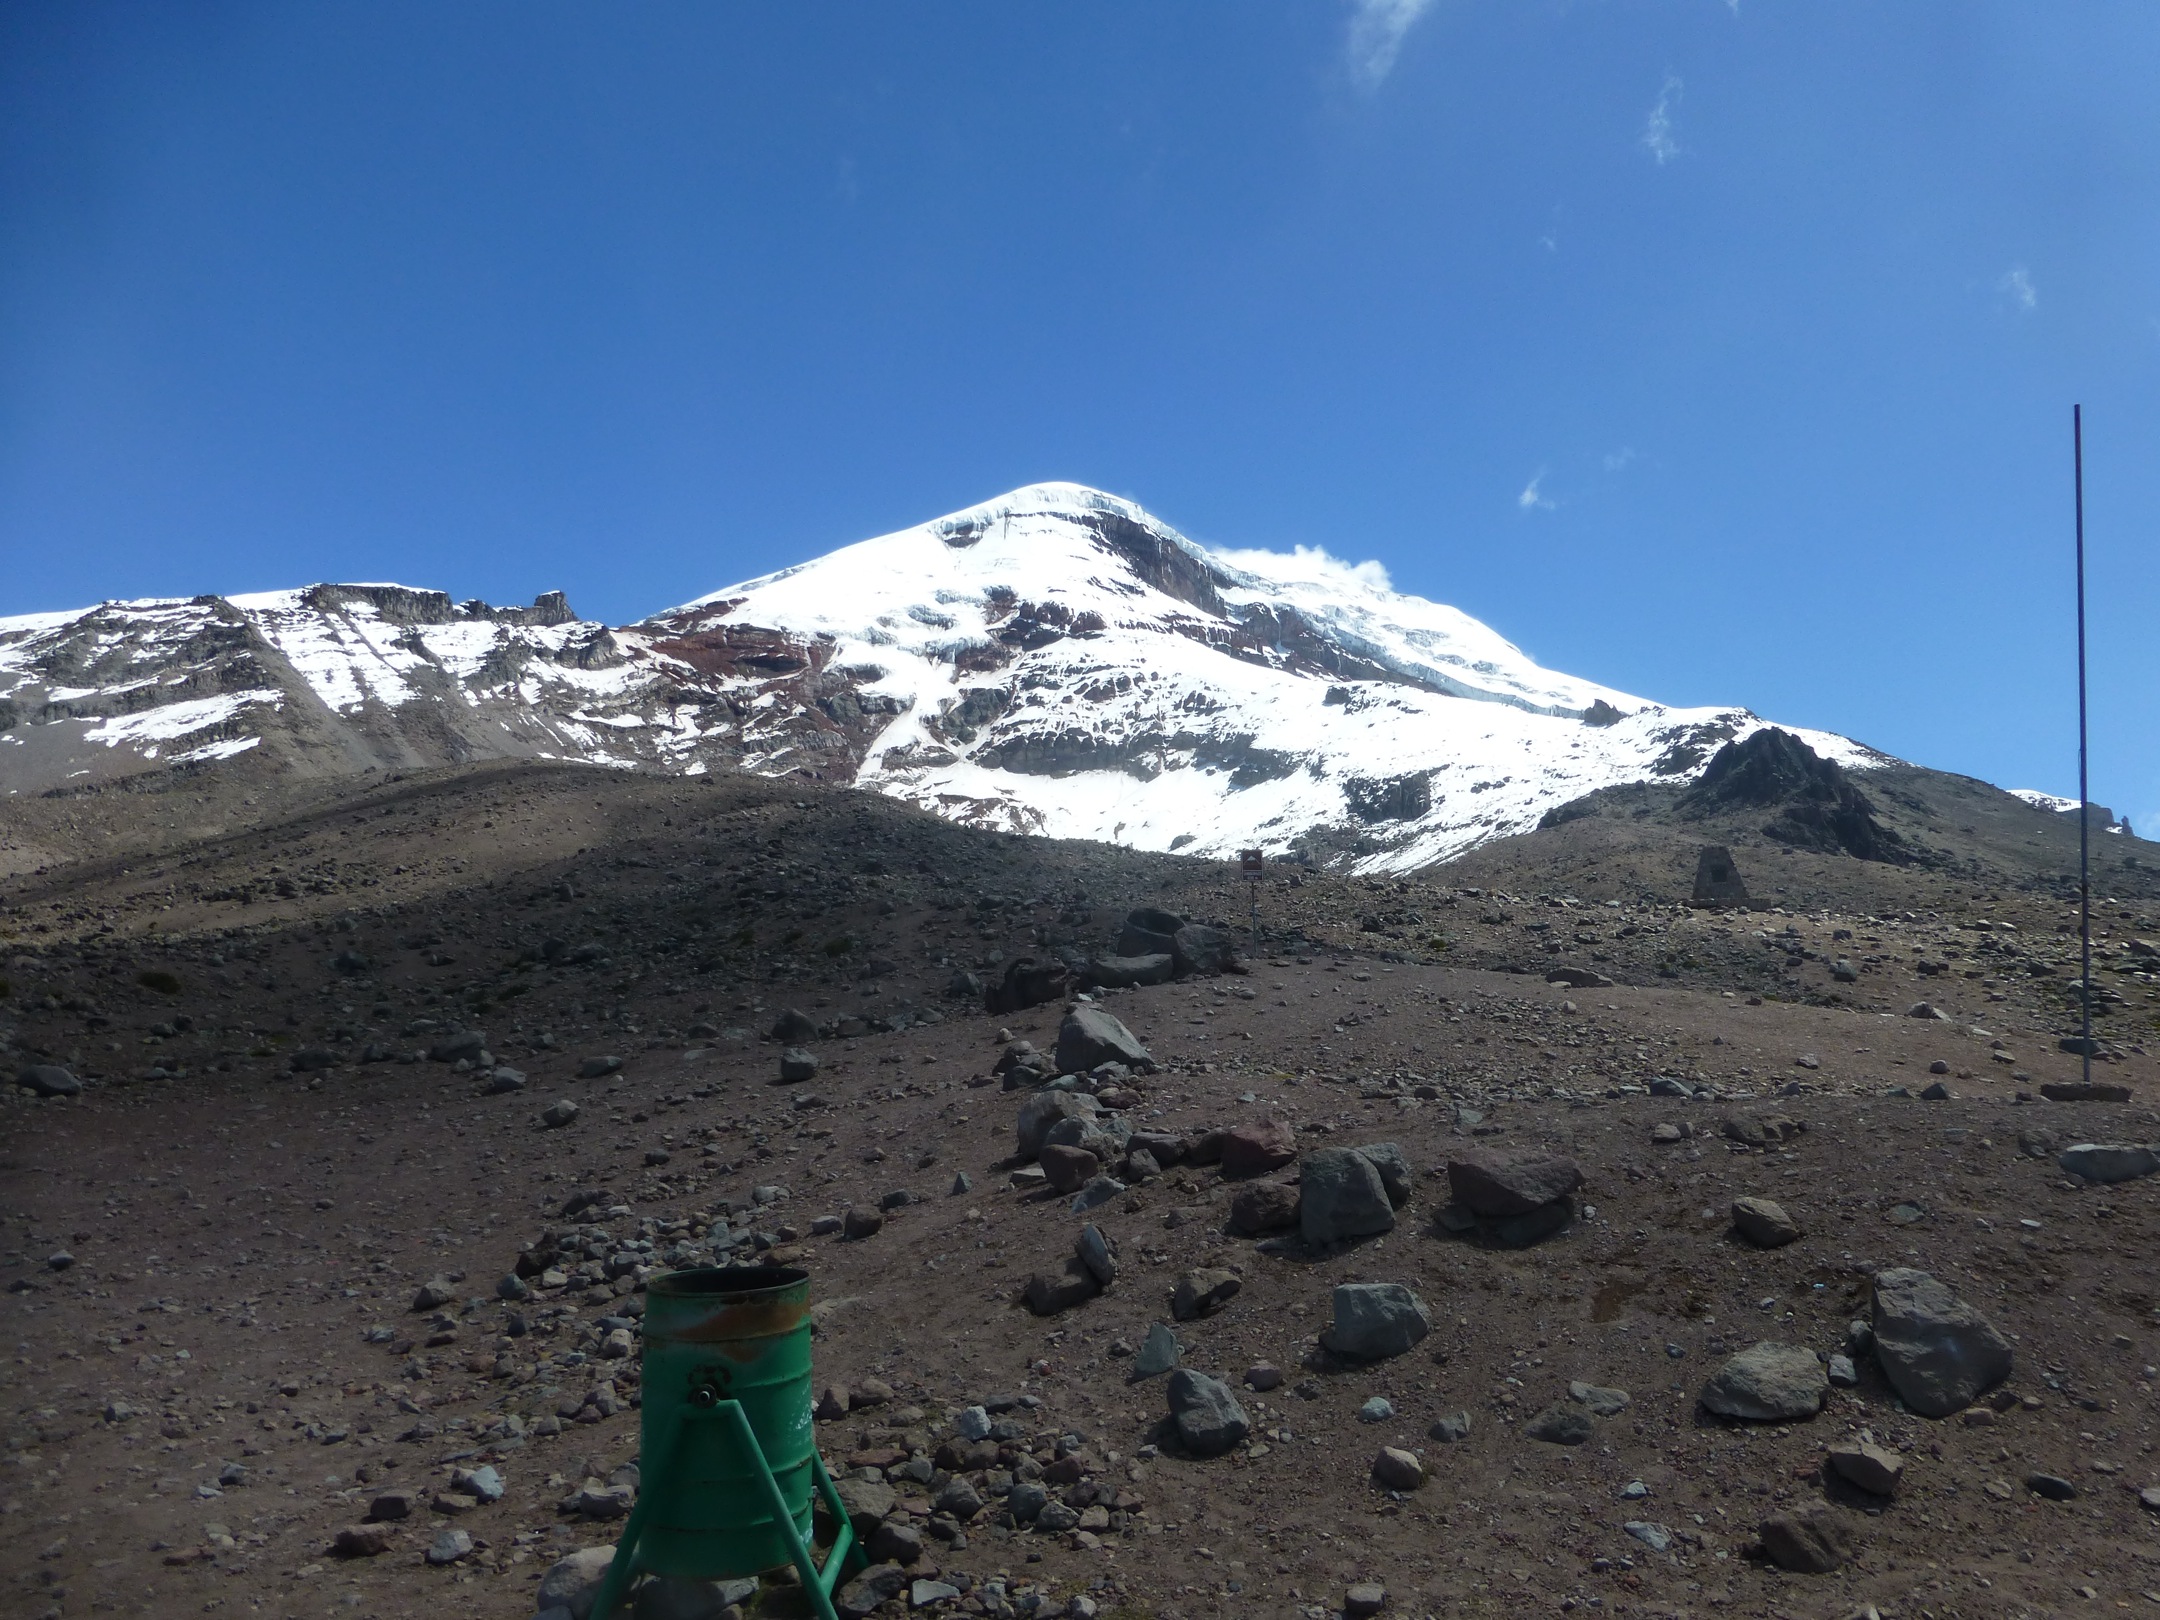 Chimborazo – 6,310 meters (20,720 ft.)